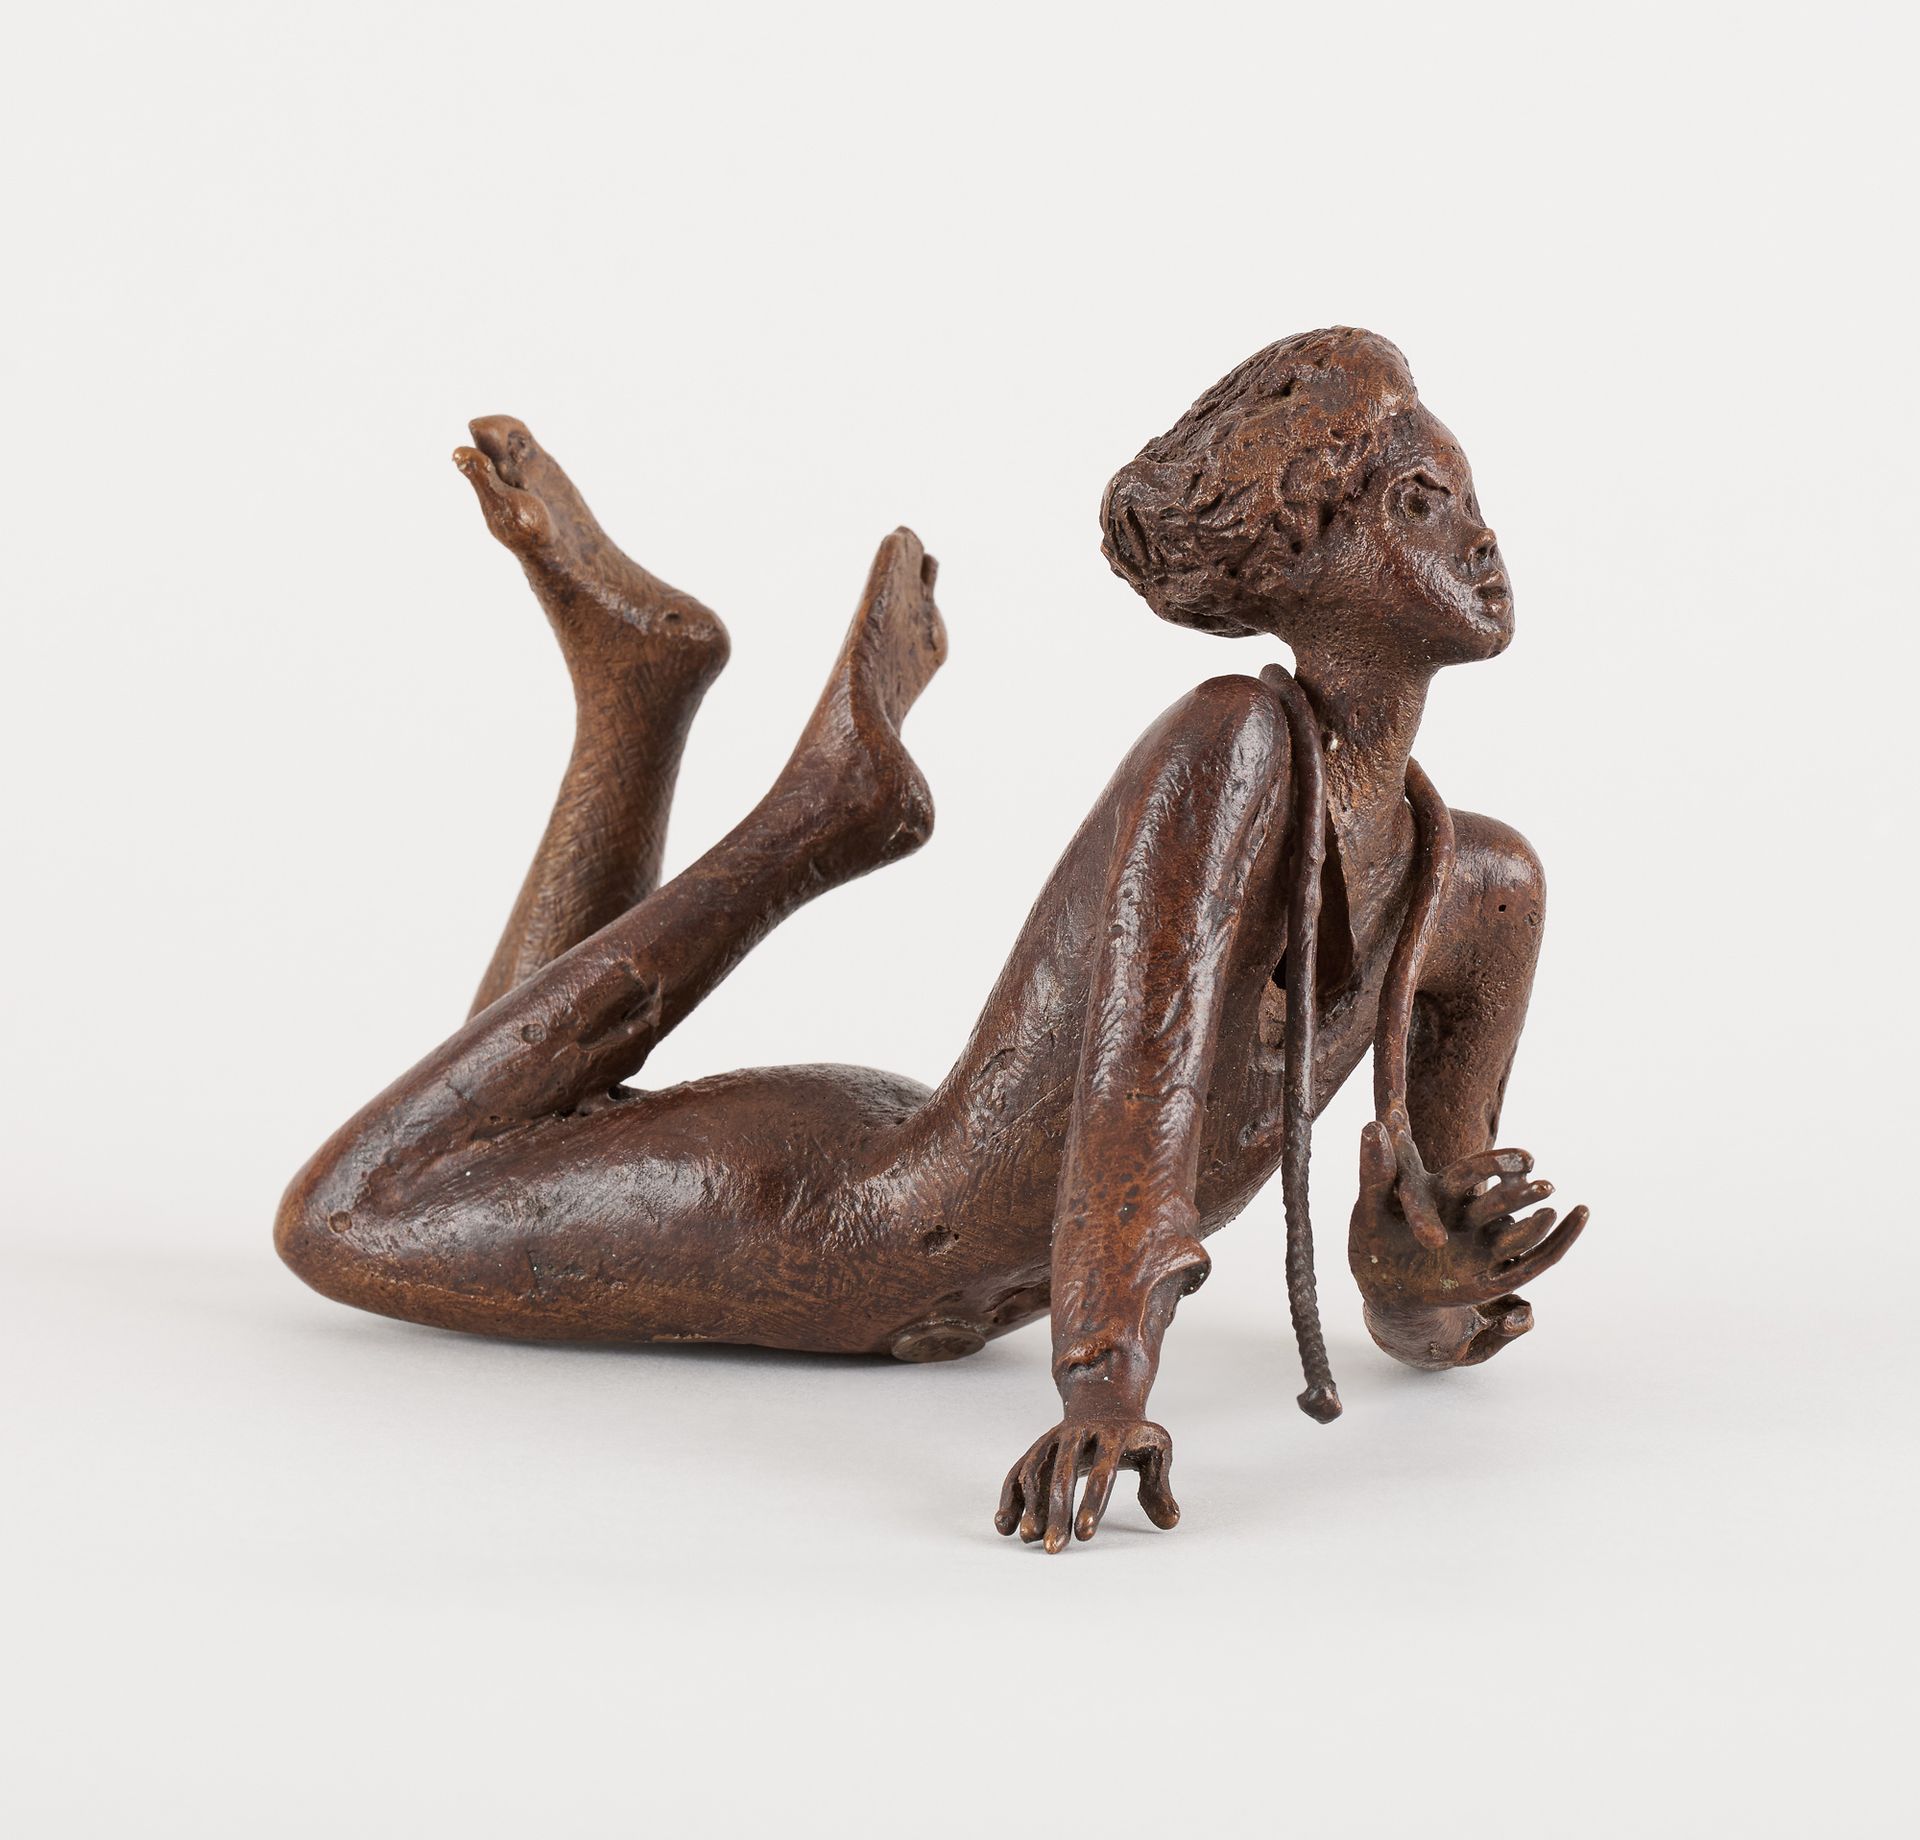 René JULIEN École belge (1937-2016) 棕色铜质雕塑：年轻的裸体女人躺着。

签名：René Julien, 提及EA为艺术家的&hellip;